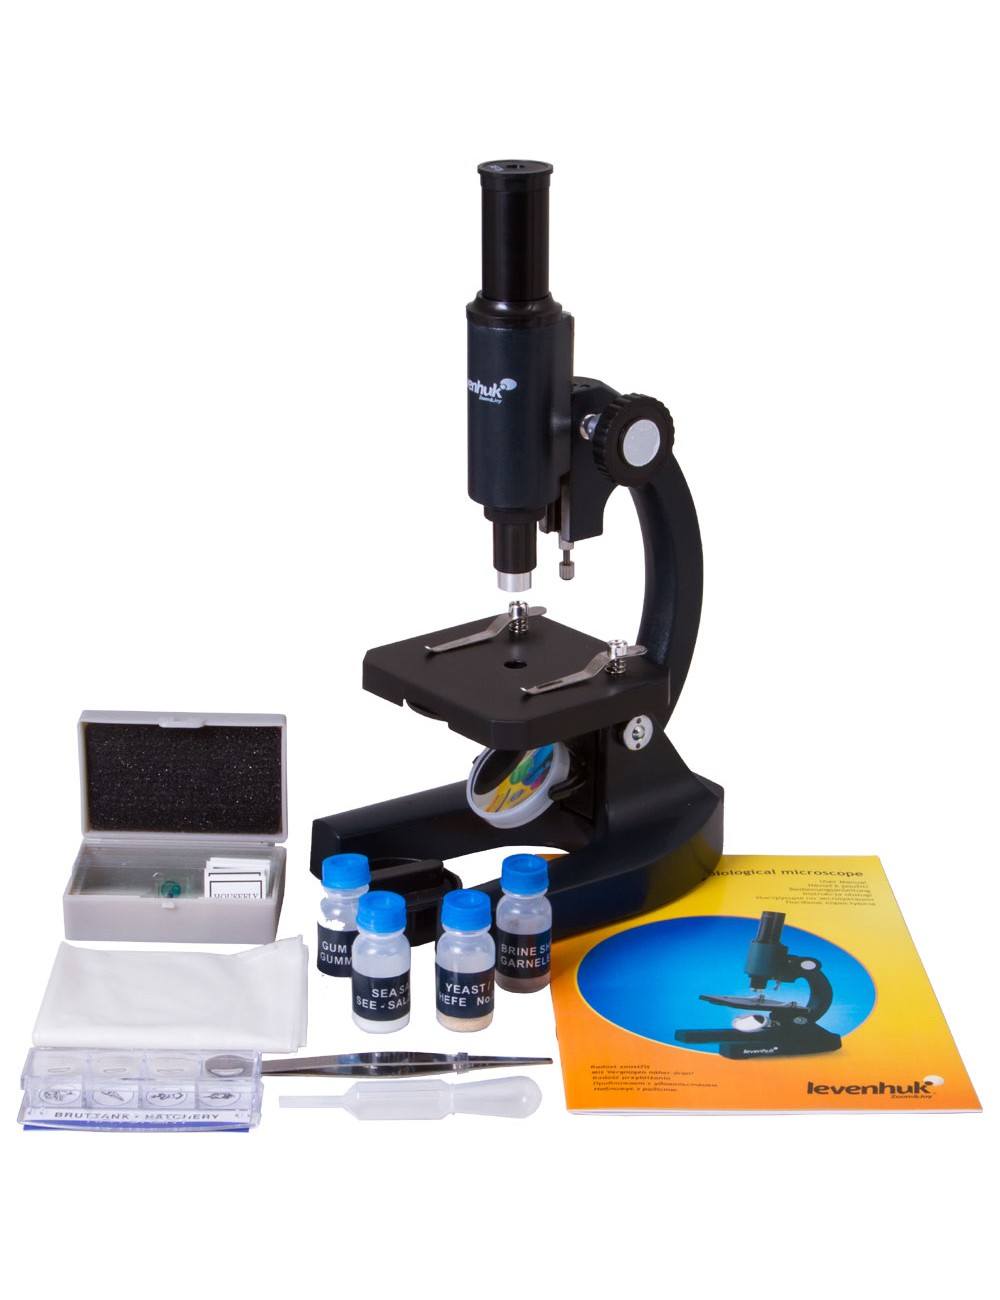 Microscopio para niños 1200x Interesante iluminación LED educativa